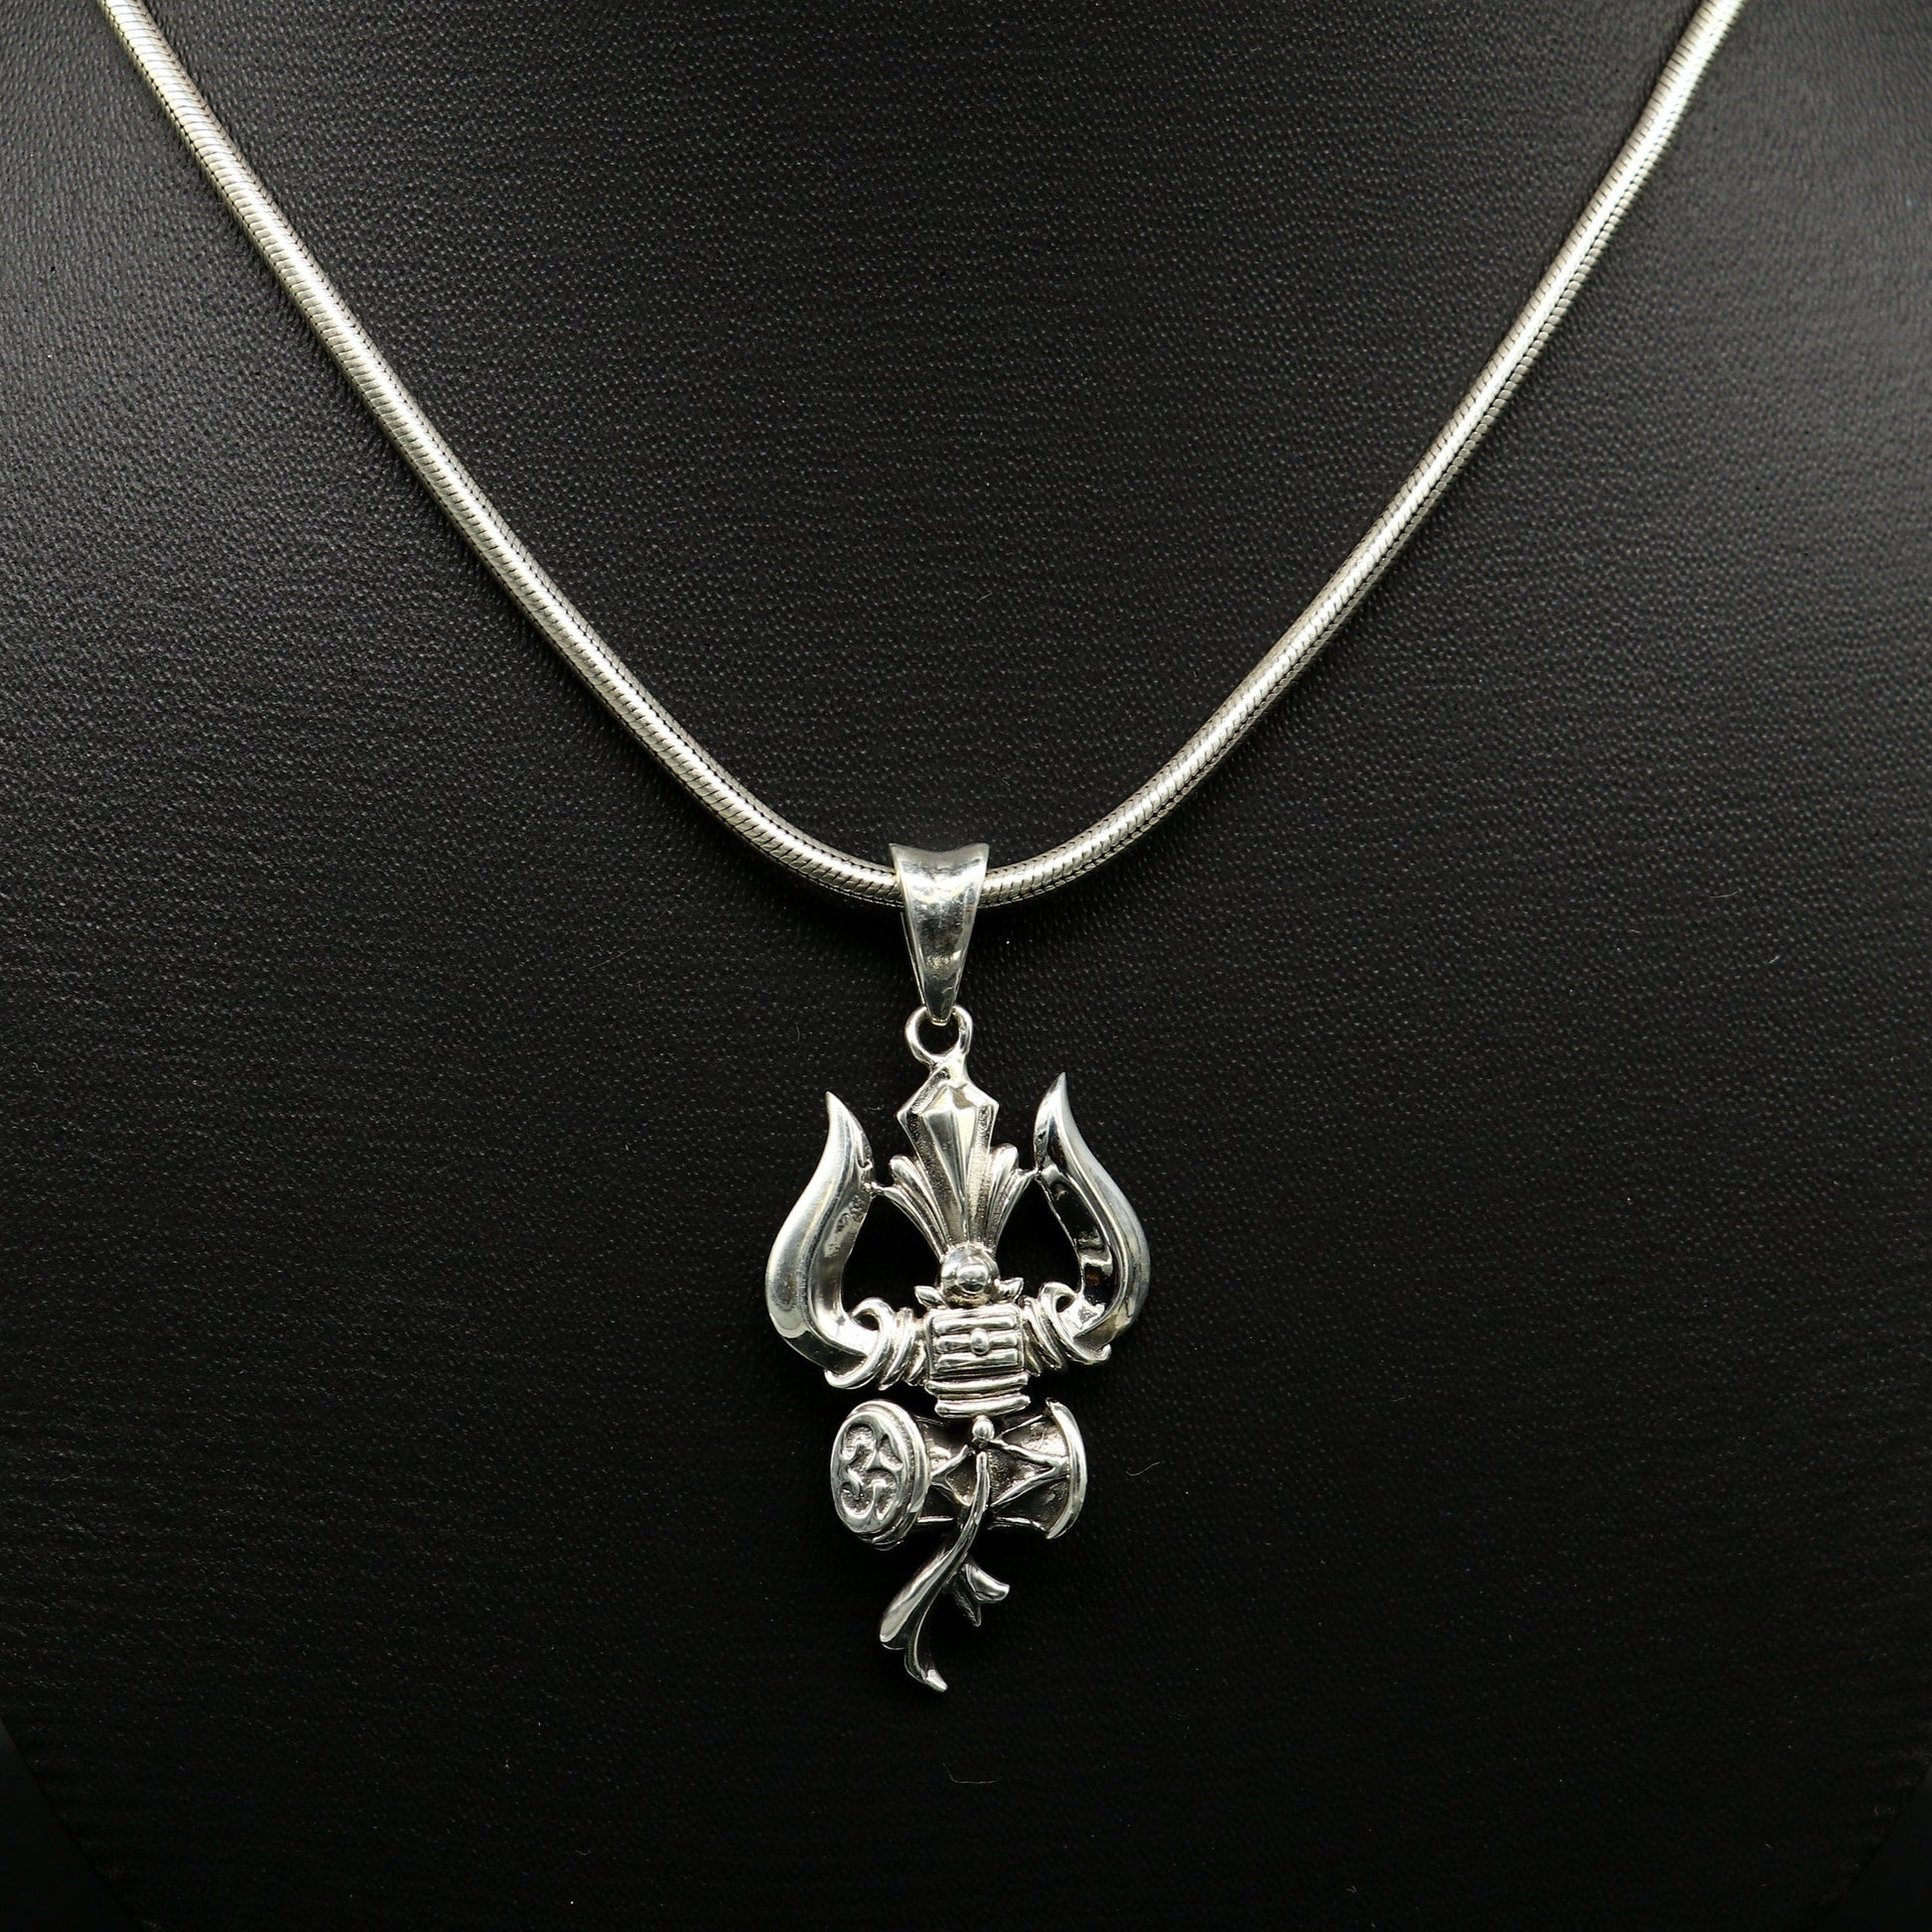 925 sterling silver Hindu idol Lord Shiva trident pendant, amazing vintage design gifting pendant customized god jewelry ssp524 - TRIBAL ORNAMENTS